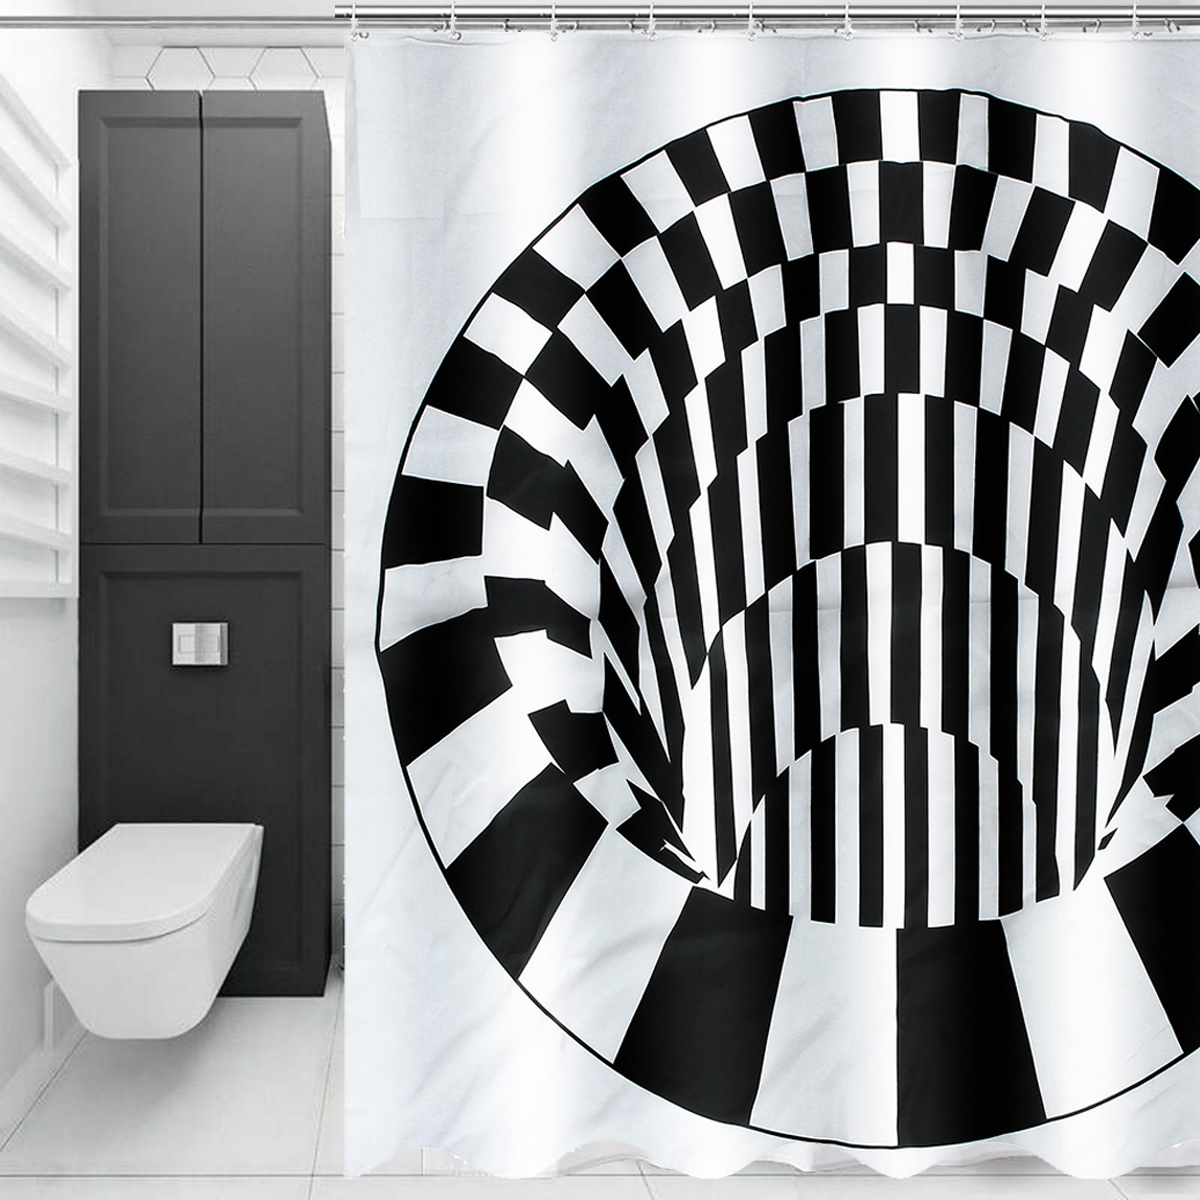 3D-Effect-Geometric-Square-Bathroom-Bath-Shower-Curtain-180180cm-w-12-1530246-3